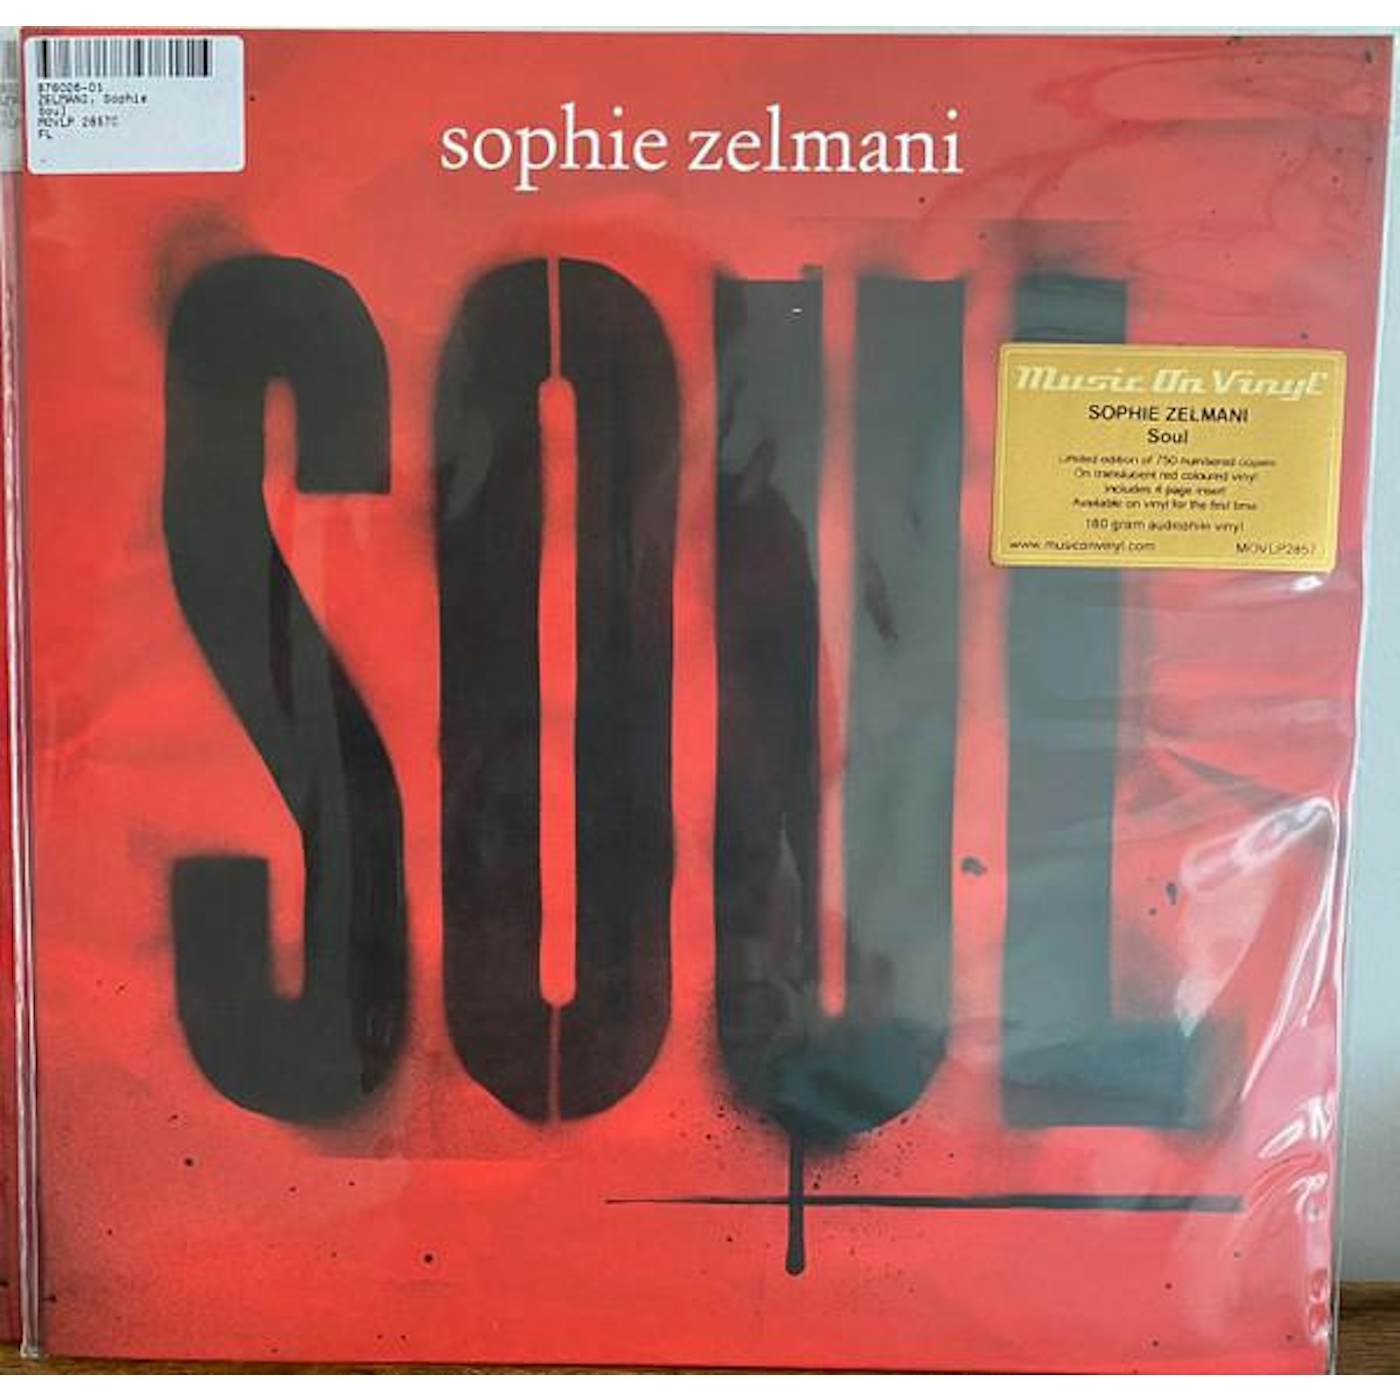 Sophie Zelmani Soul Vinyl Record